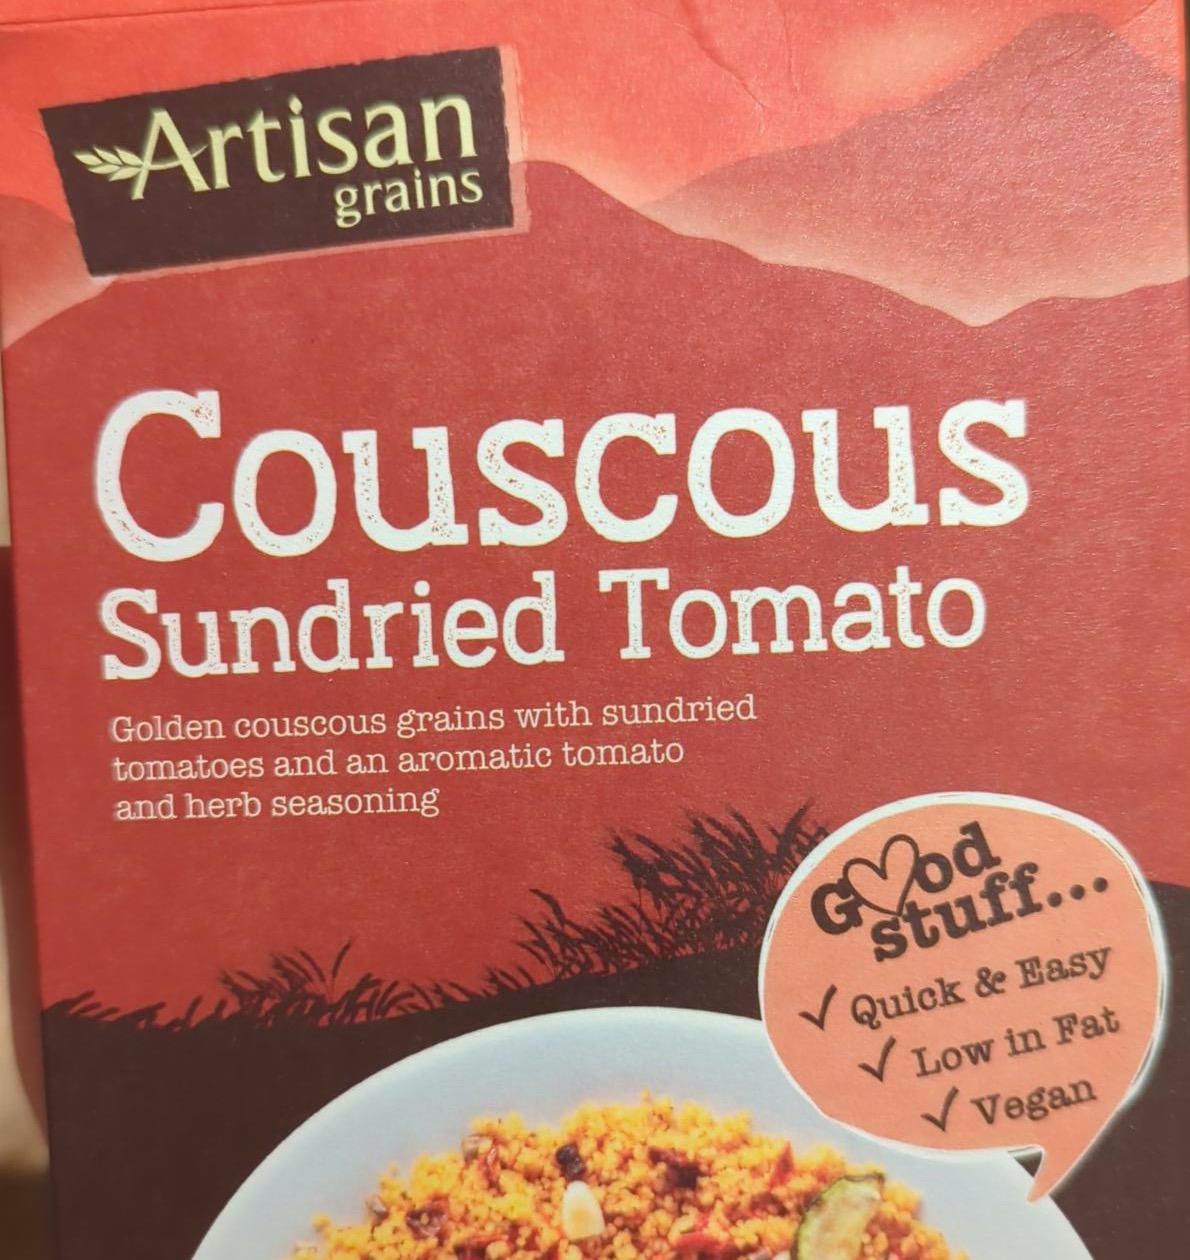 Fotografie - Couscous Sundried Tomato Artisan grains